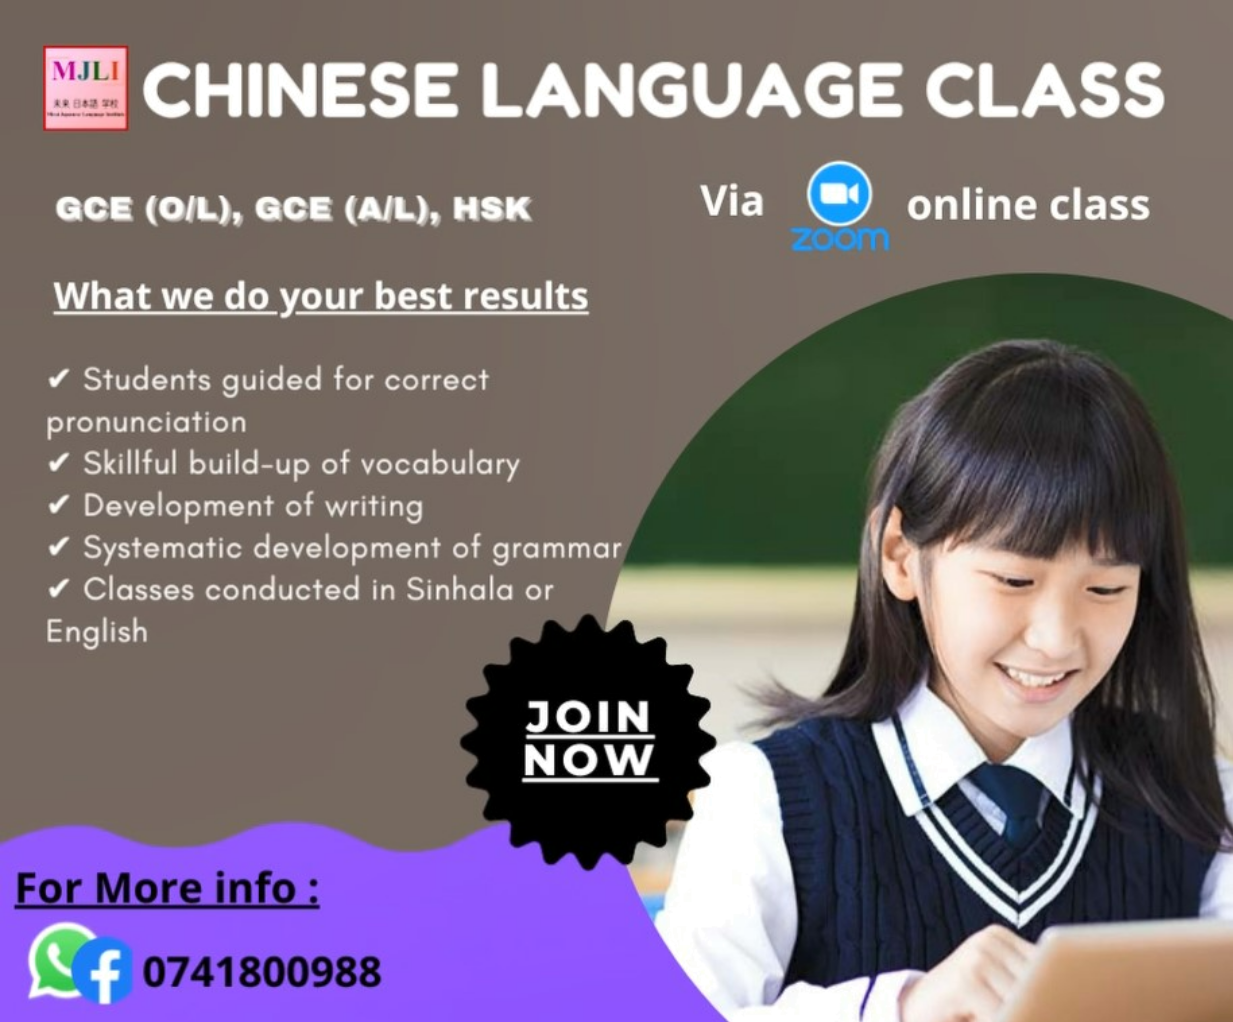 Chinse Language Course for Future Jobs in Port City – MIRAI Japanese Language Institute